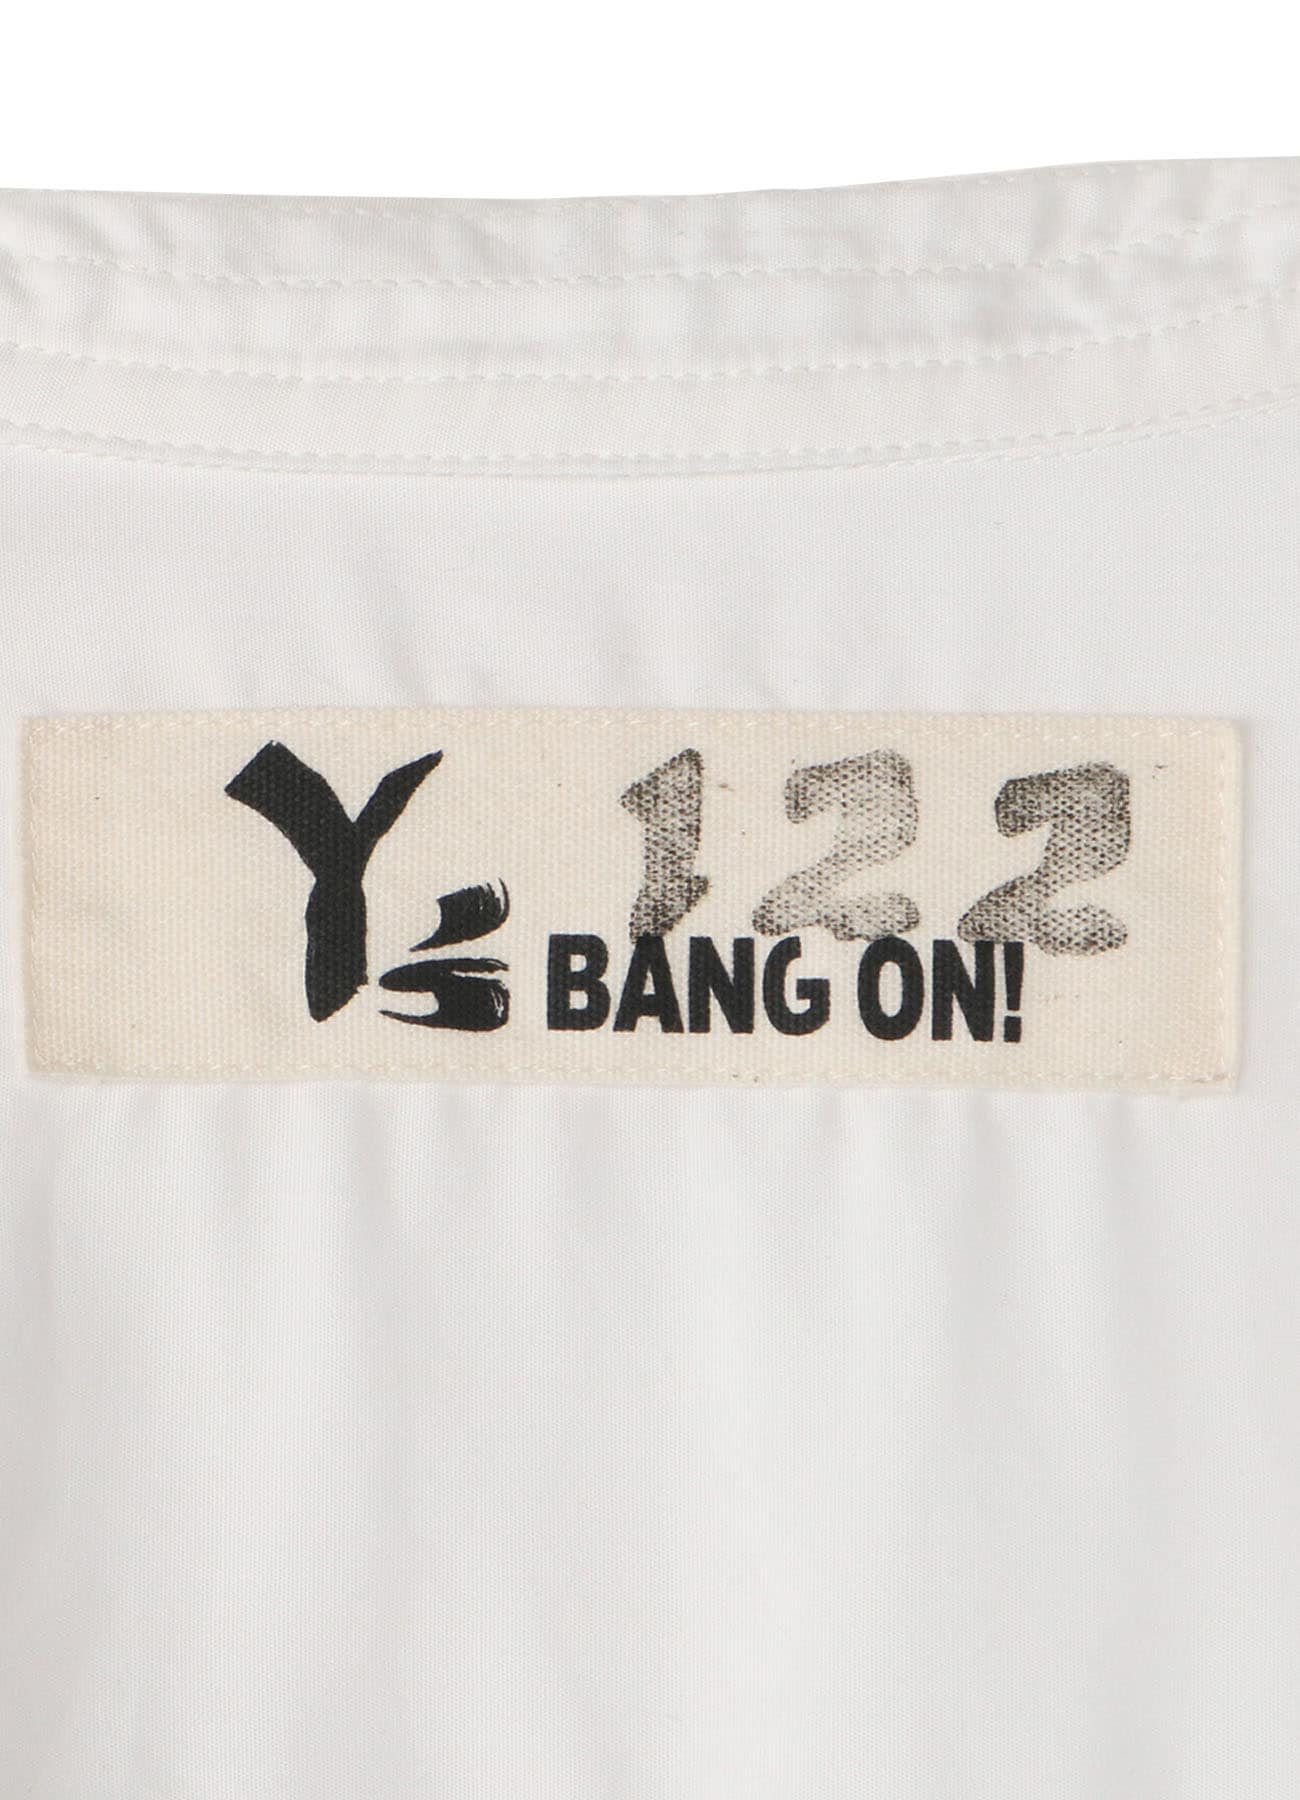 Y's BANG ON!No.122 Stitch tab-shirts Cotton broad